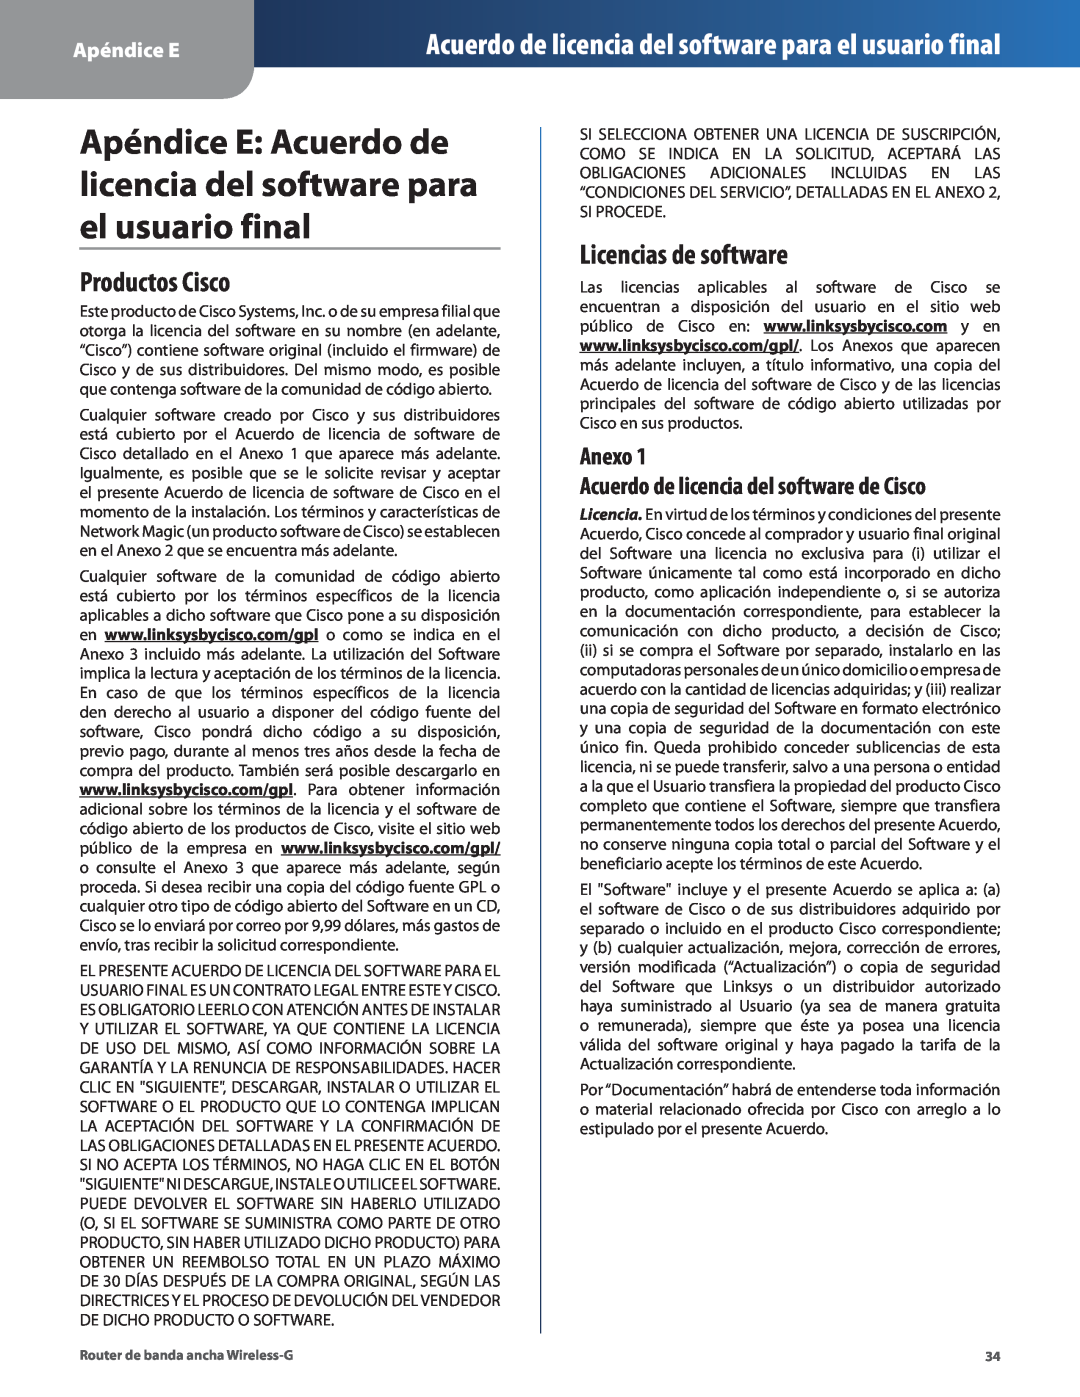 Cisco Systems WRT54G2 manual Apéndice E Acuerdo de licencia del software para el usuario final, Productos Cisco, Anexo 